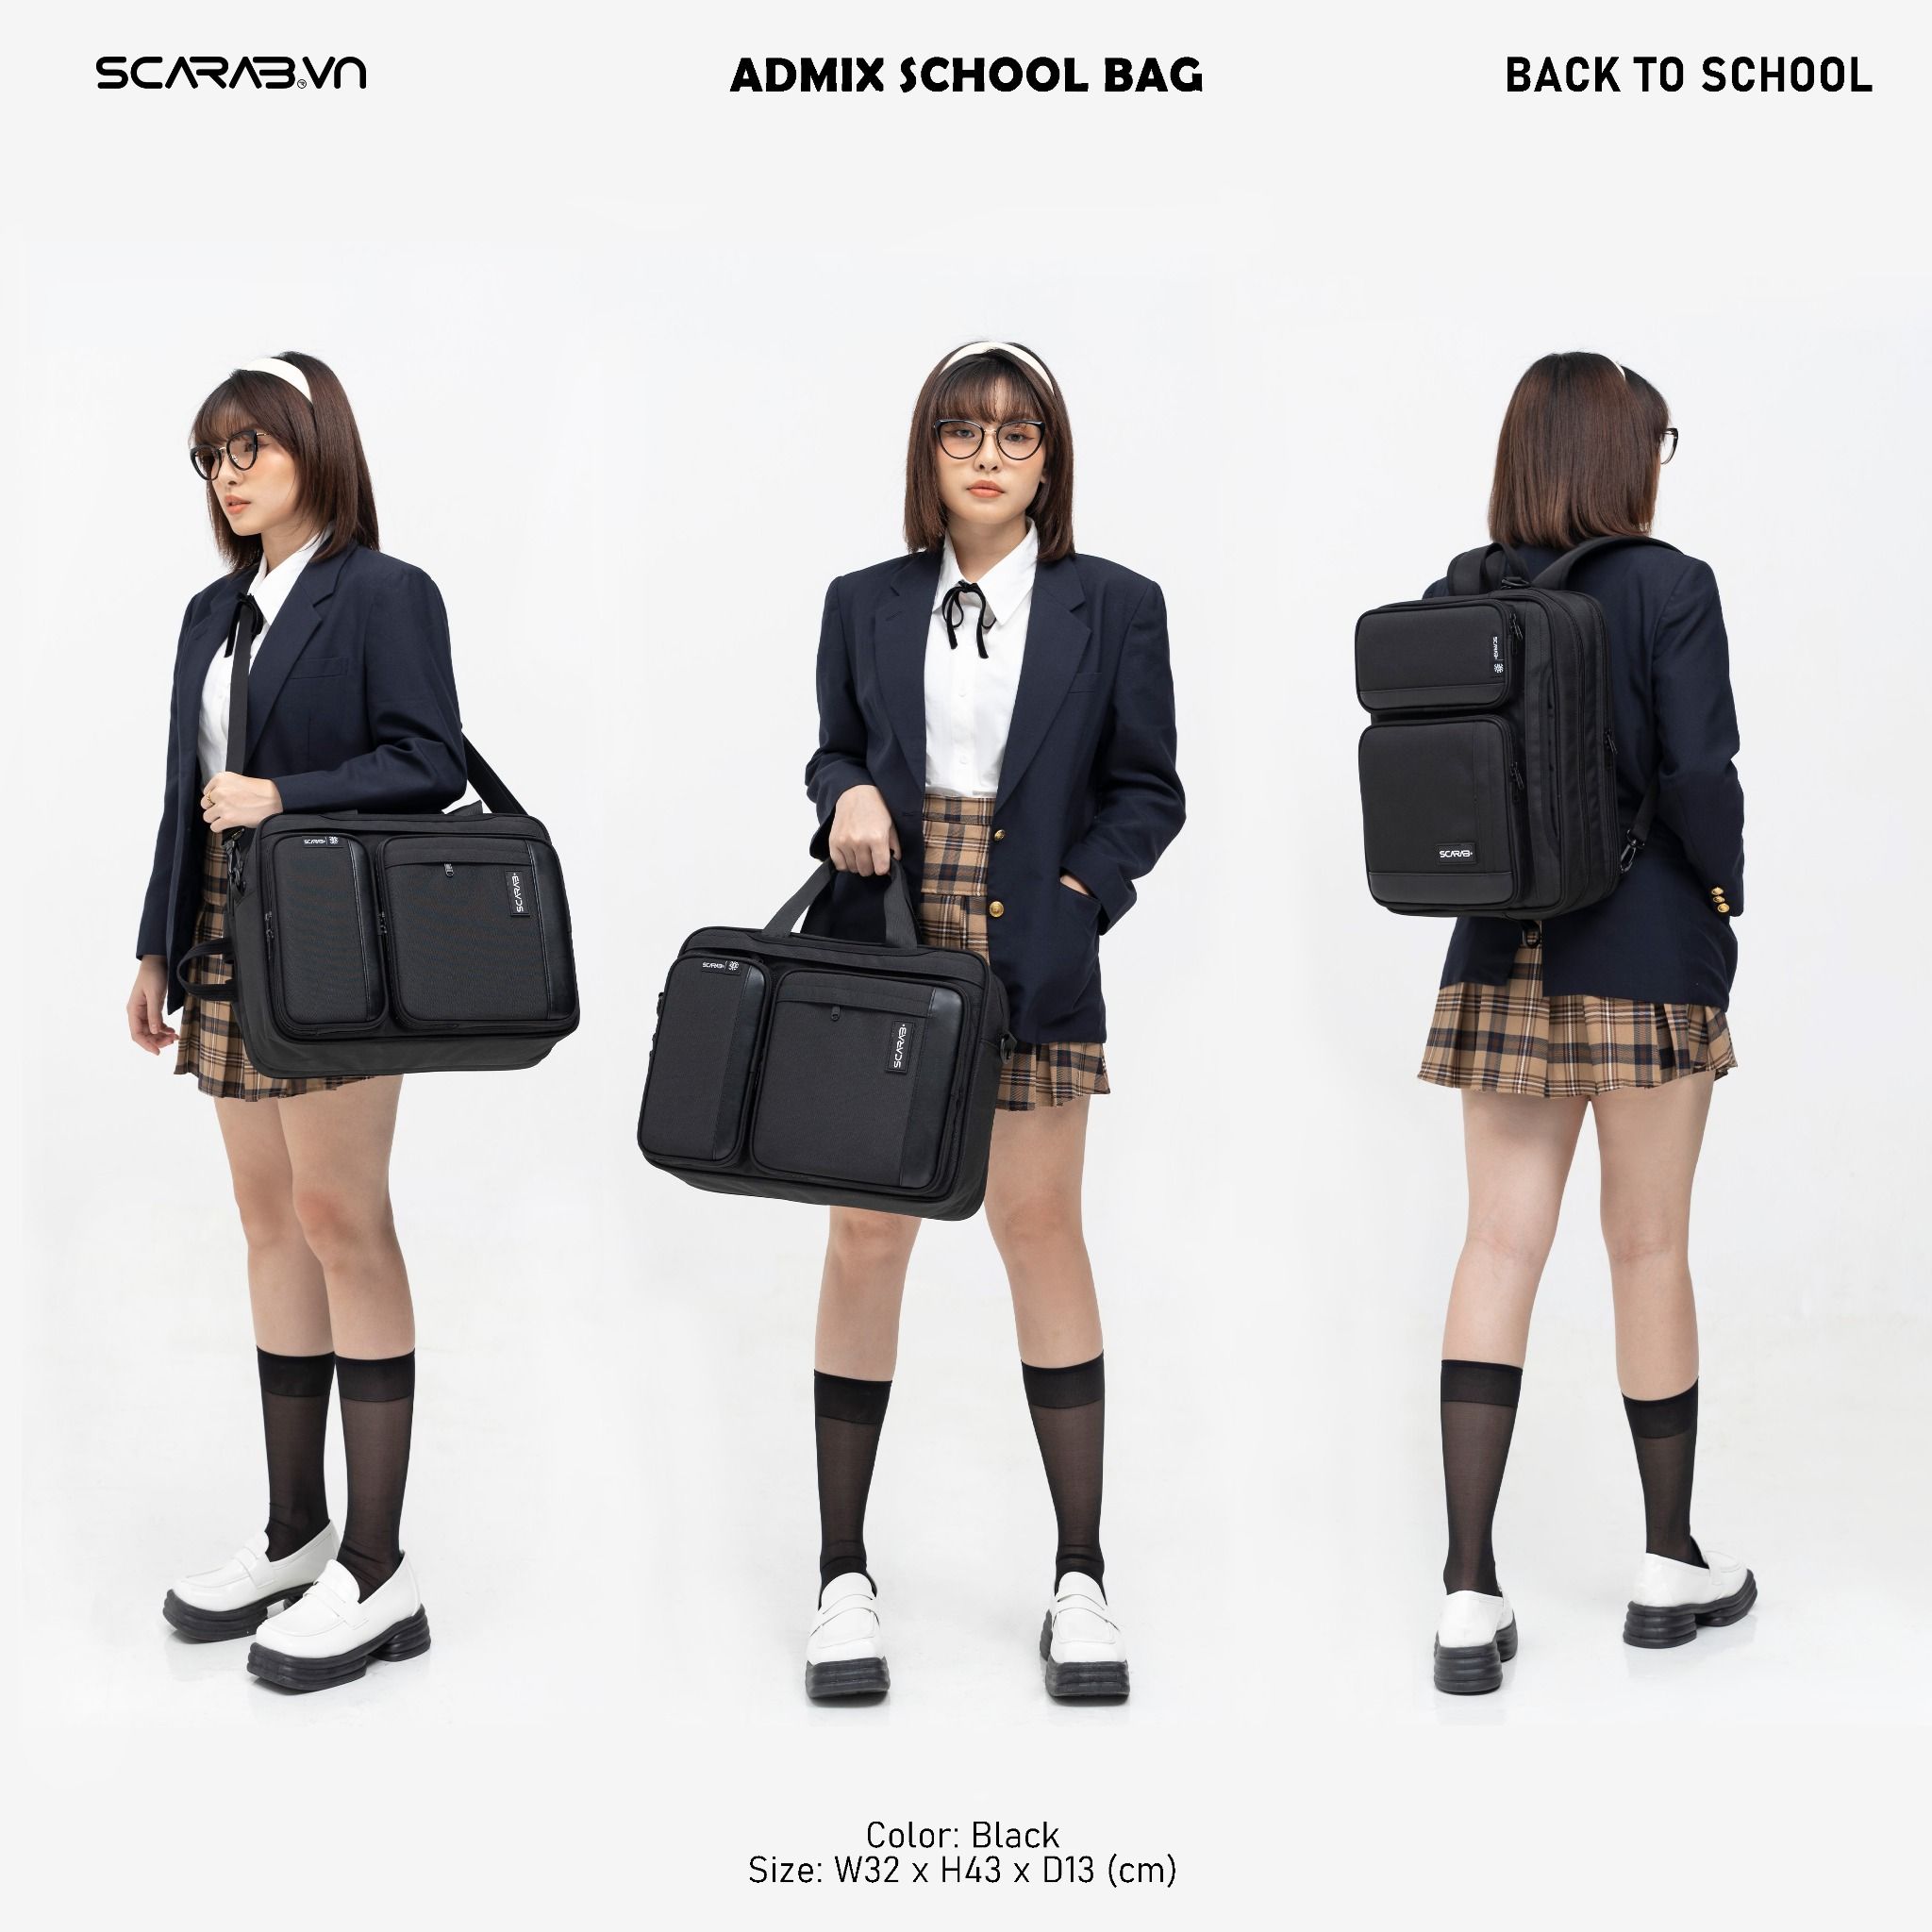  Admix School Bag -  Grey 